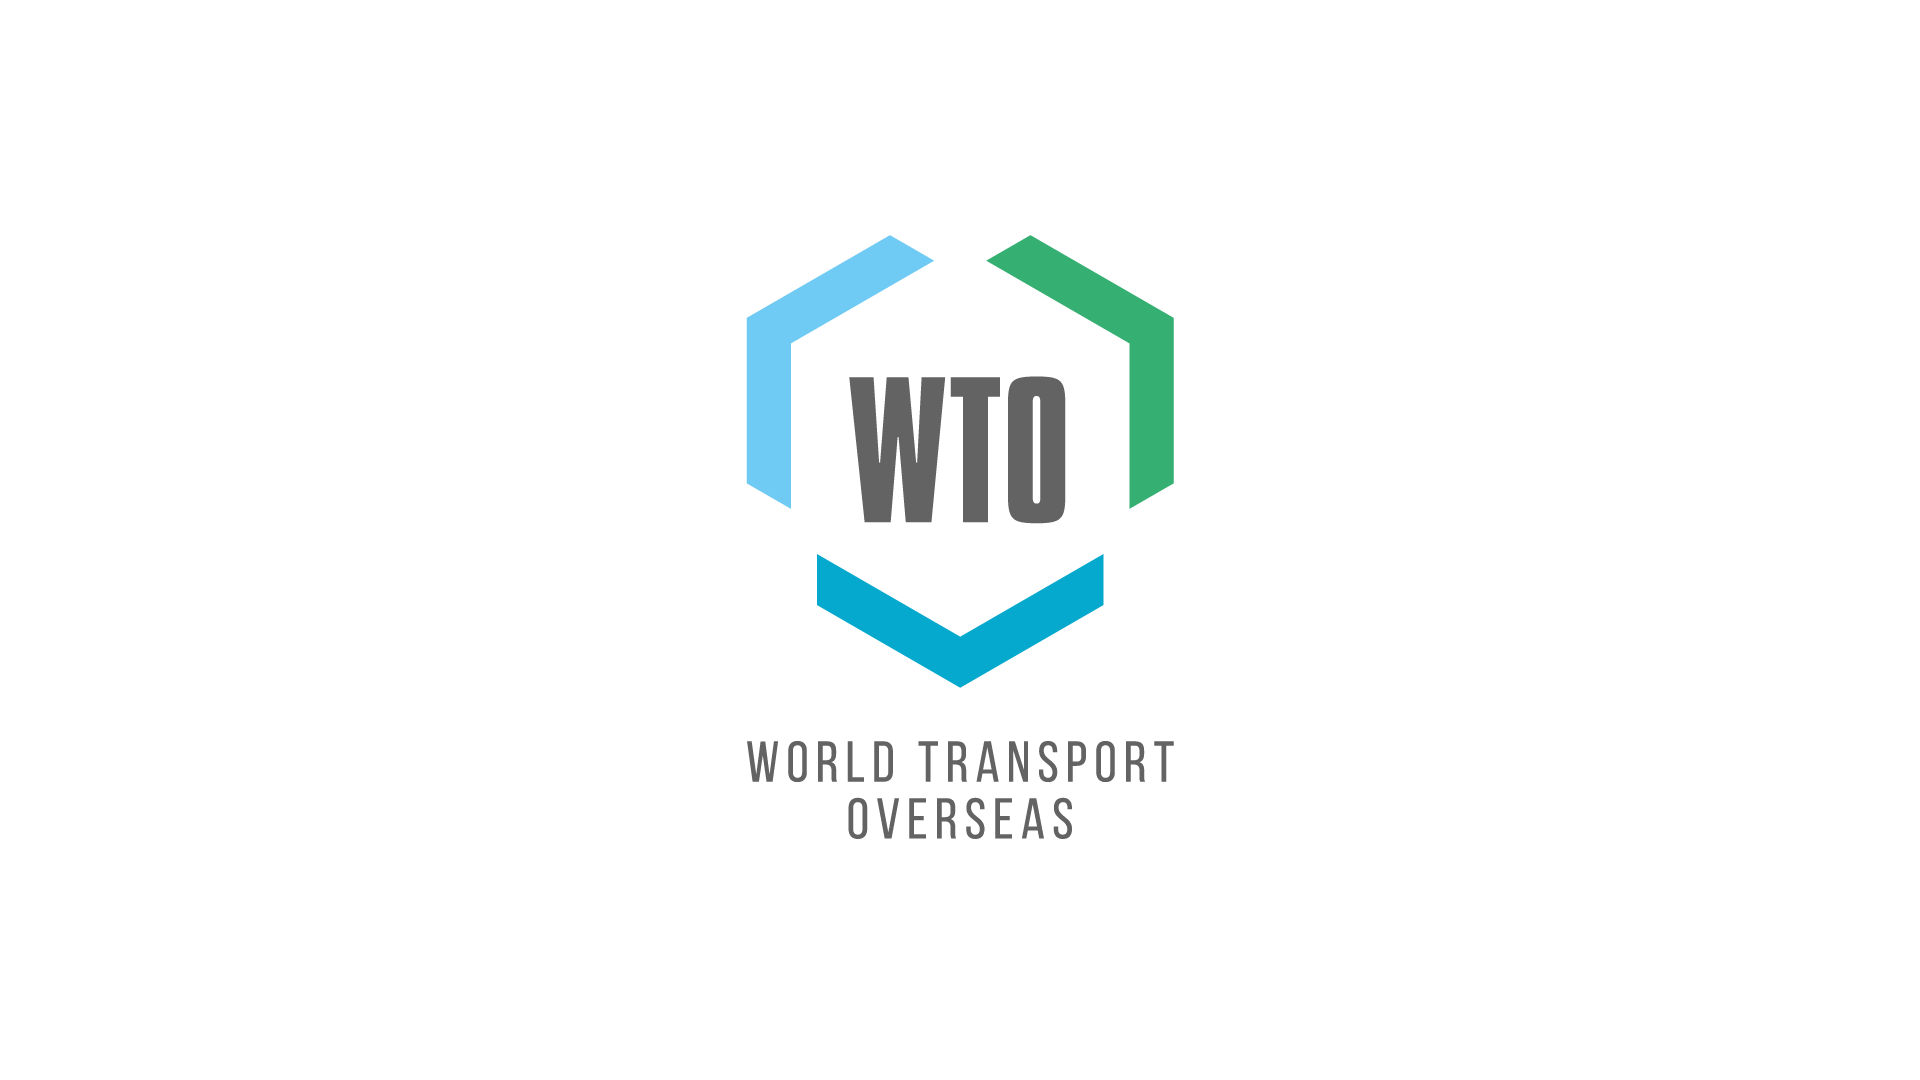 World Transport Overseas unveils a new corporate identity